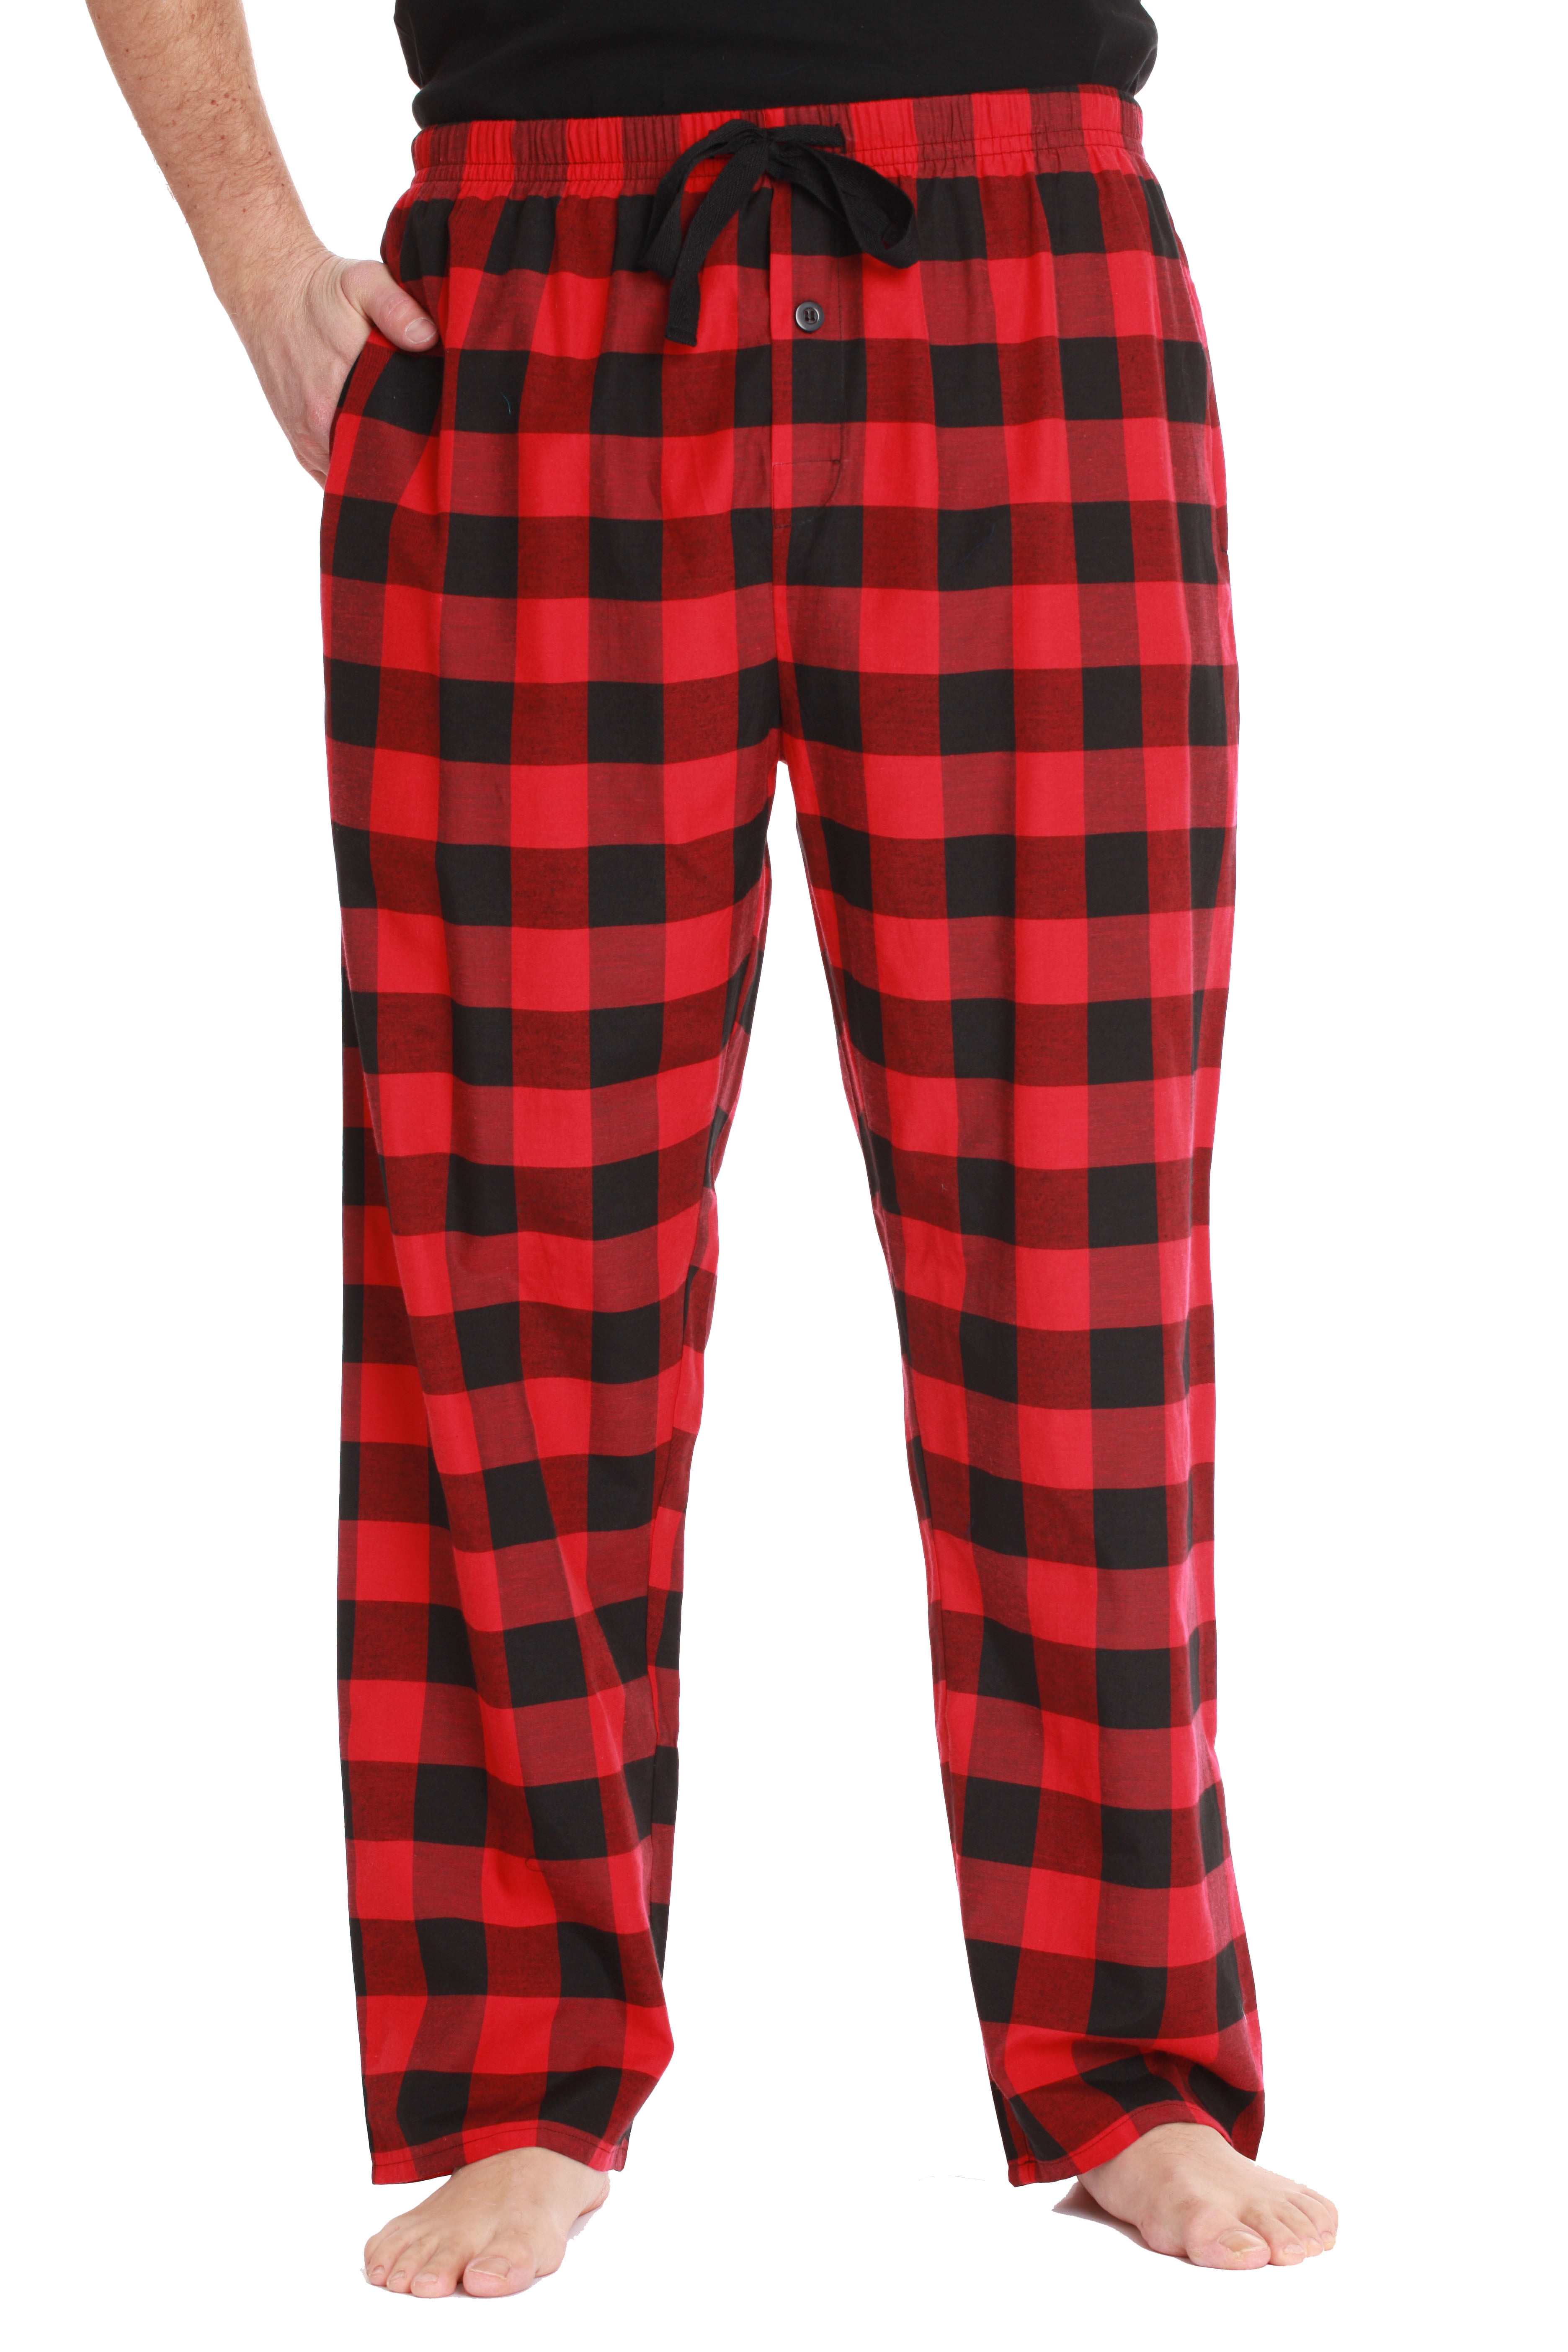 Mens Fleece Pyjamas Bottoms Mens Pajamas Mens Lounge Pants Loungewear  Bottoms | eBay